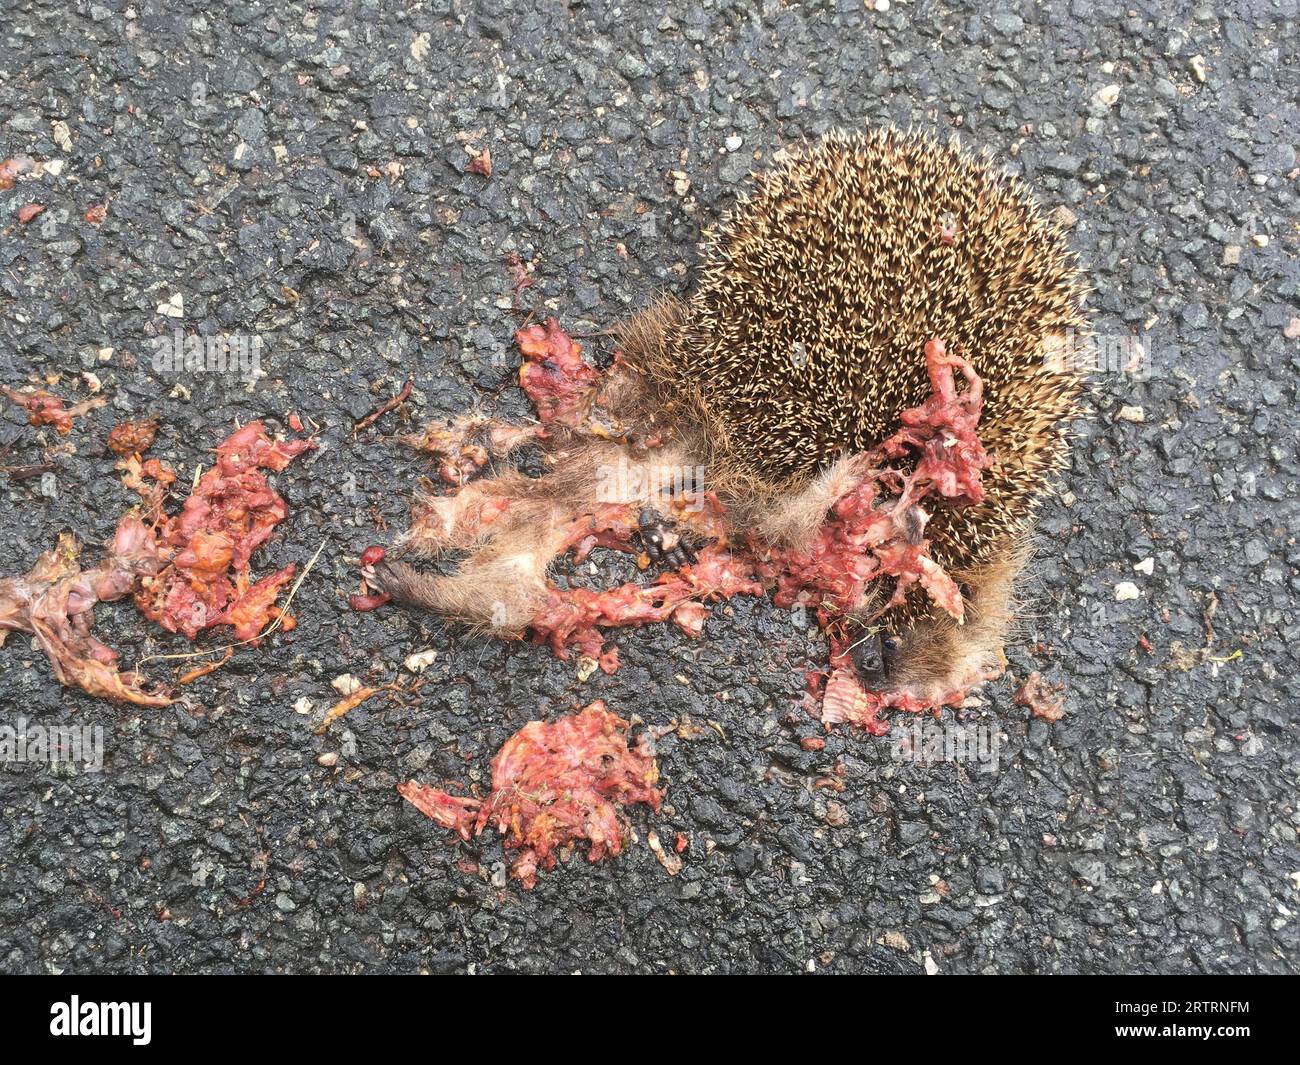 European hedgehog (Erinaceus europaeus), roadkill, death, road traffic, cruel, Berlin, Germany Stock Photo